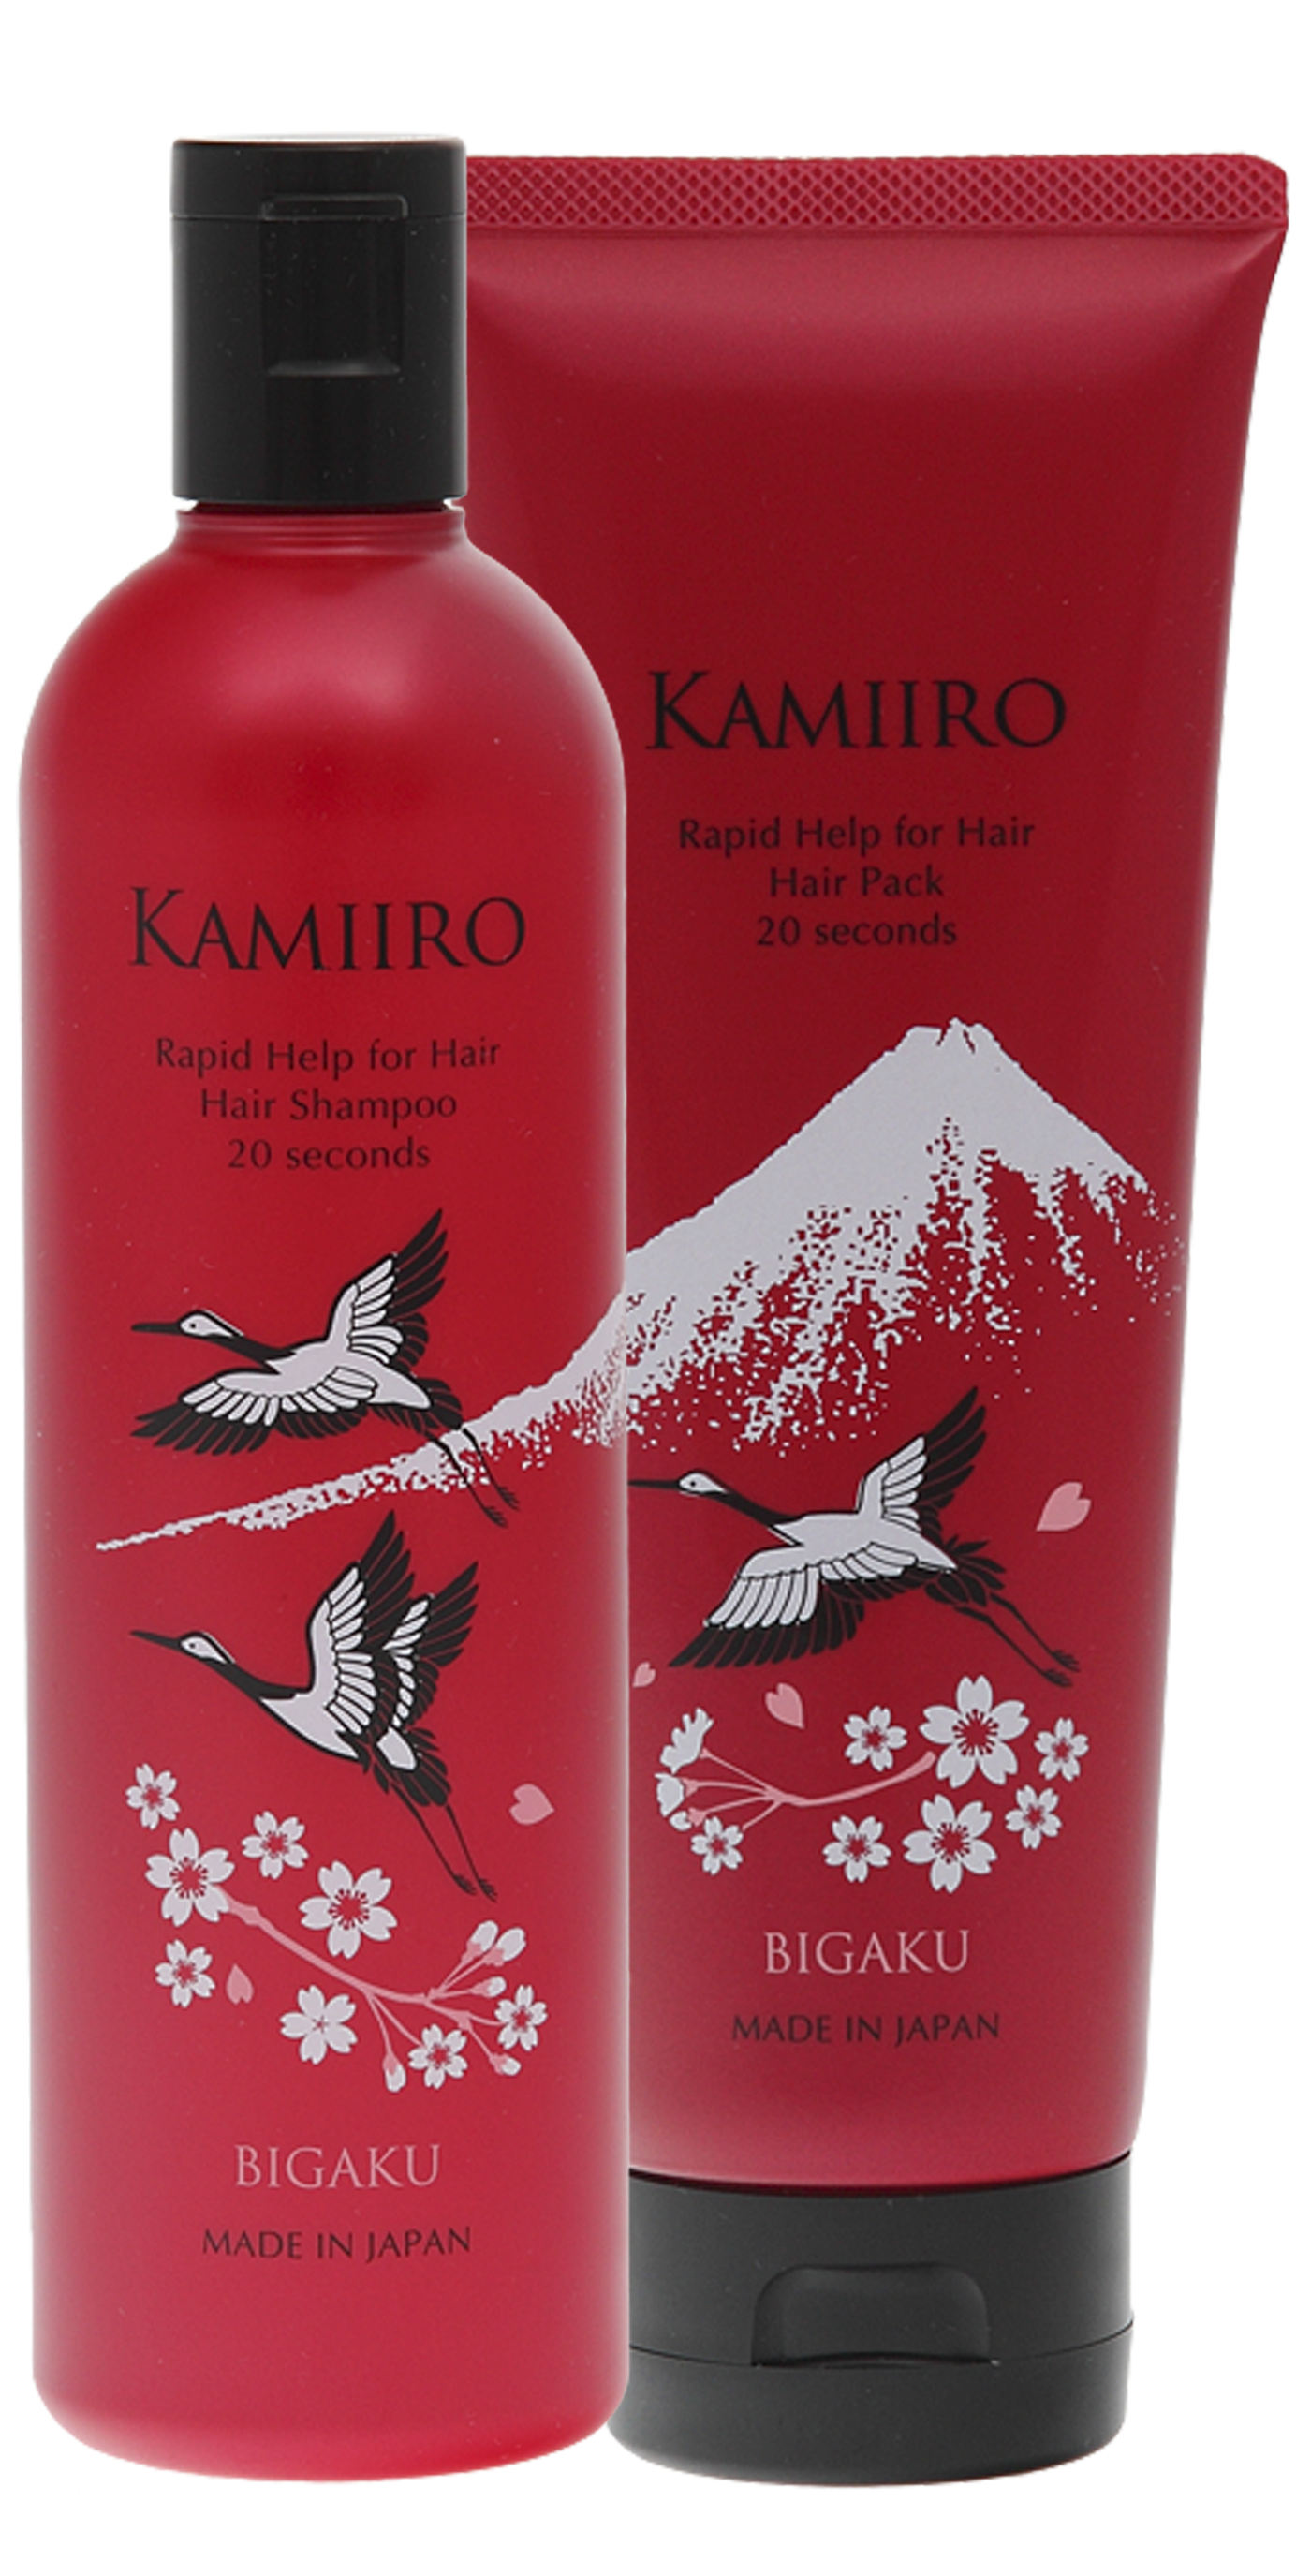 Kamiiro Rapid Help For Hair набор шампунь и маска Cкорая помощь для волос за 20 секунд, 330мл + 250г